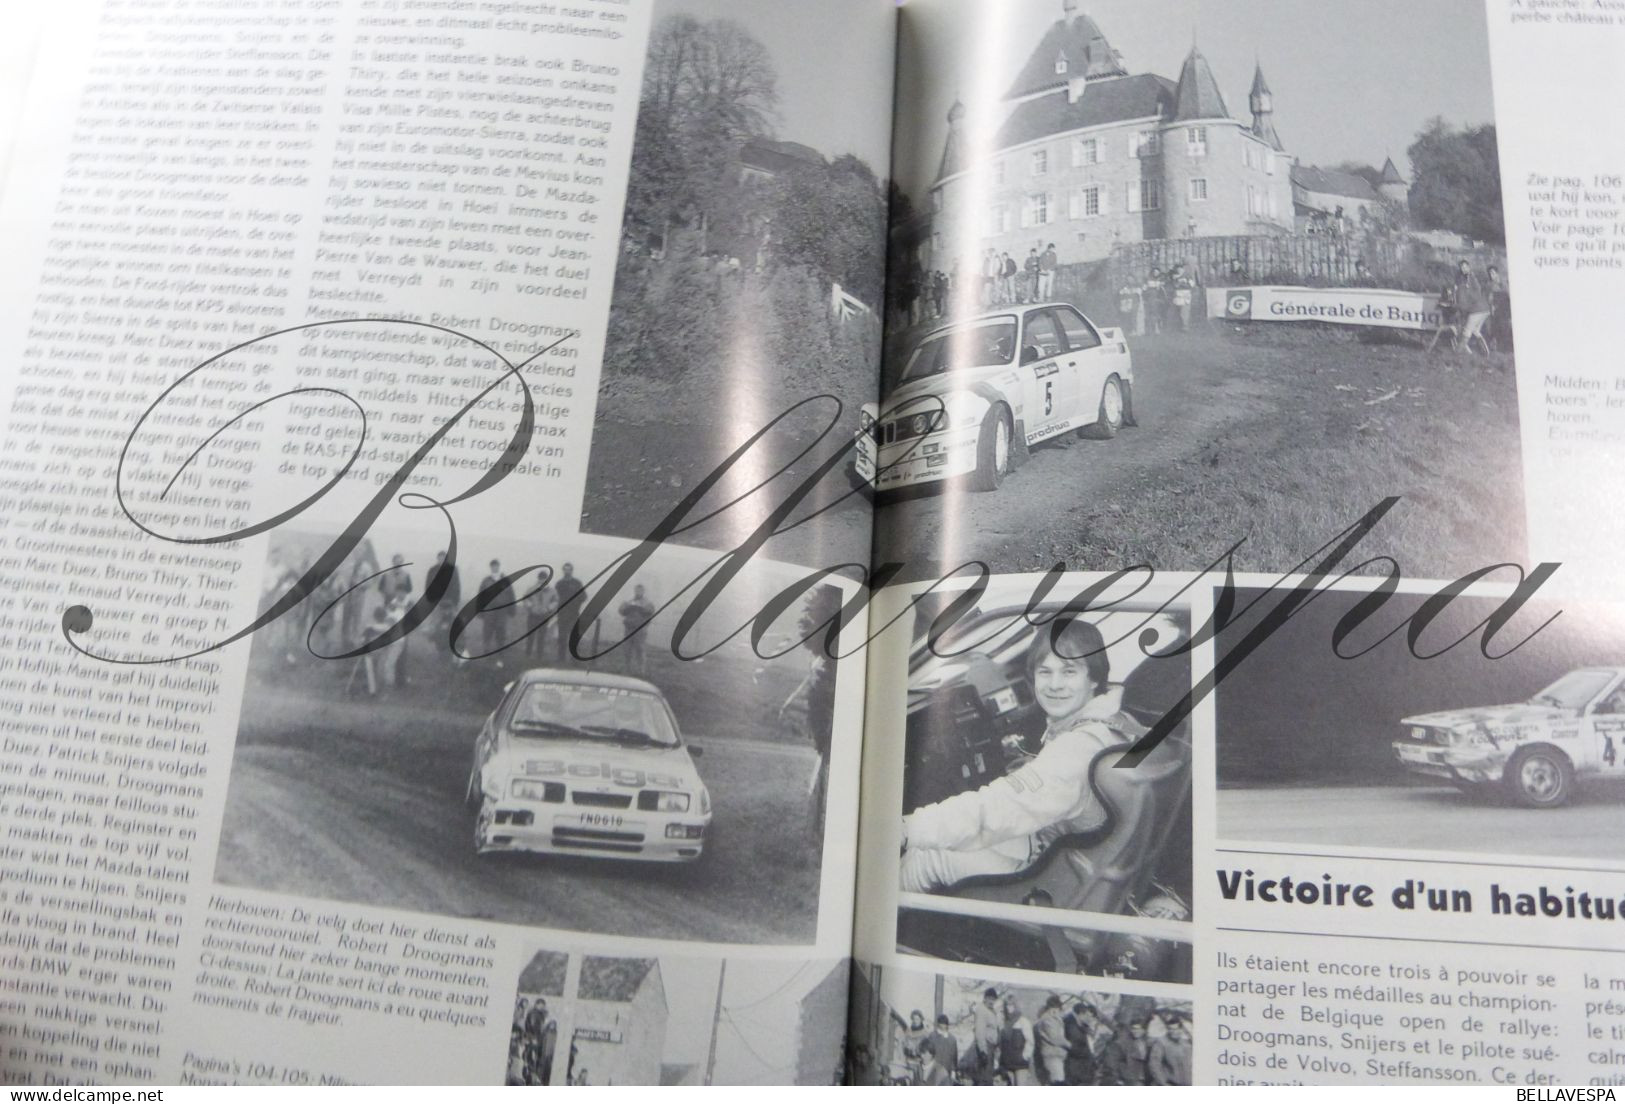 Rallyworld 1987-88 Willy Weynens 24 uren  Droogmans Opel Ieper Condroz safari sveska ralliet monte carlo bianchi Manta